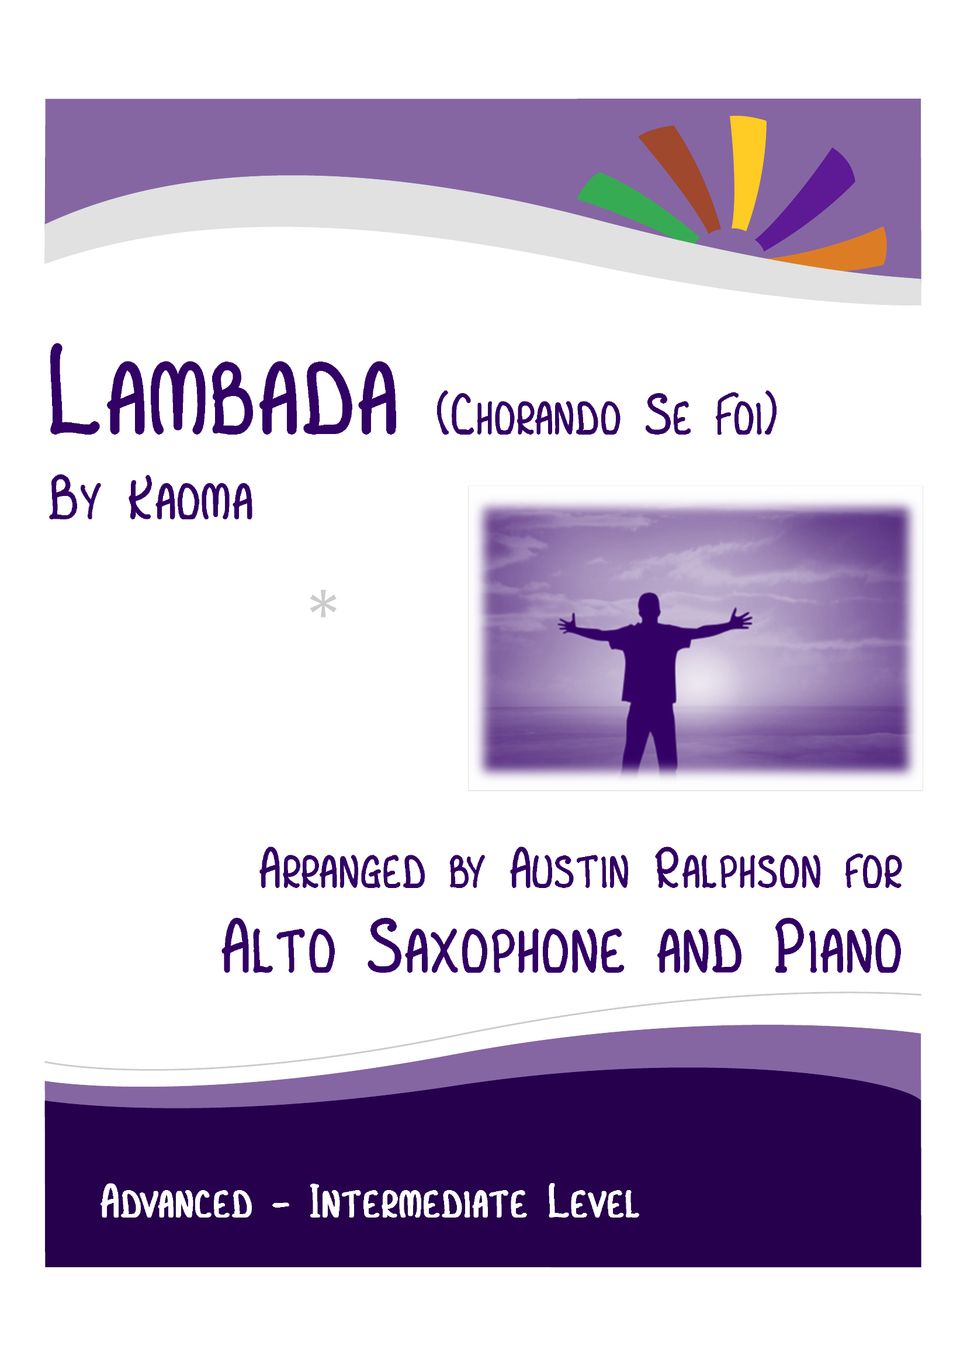 Kaoma - Chorando Se Foi (Lambada) - alto sax and piano by Austin Ralphson